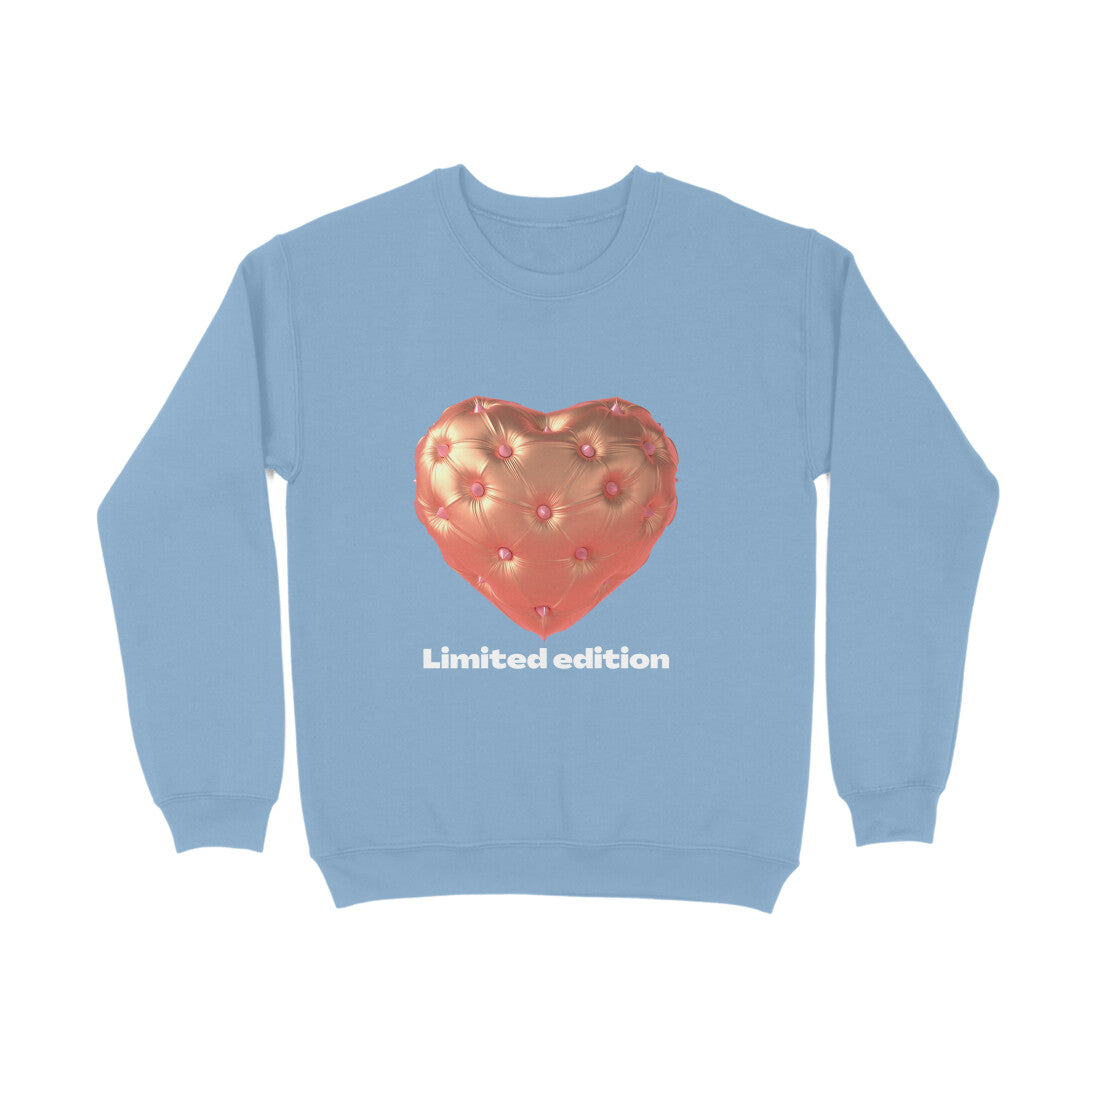 Limited edition- Sweatshirt